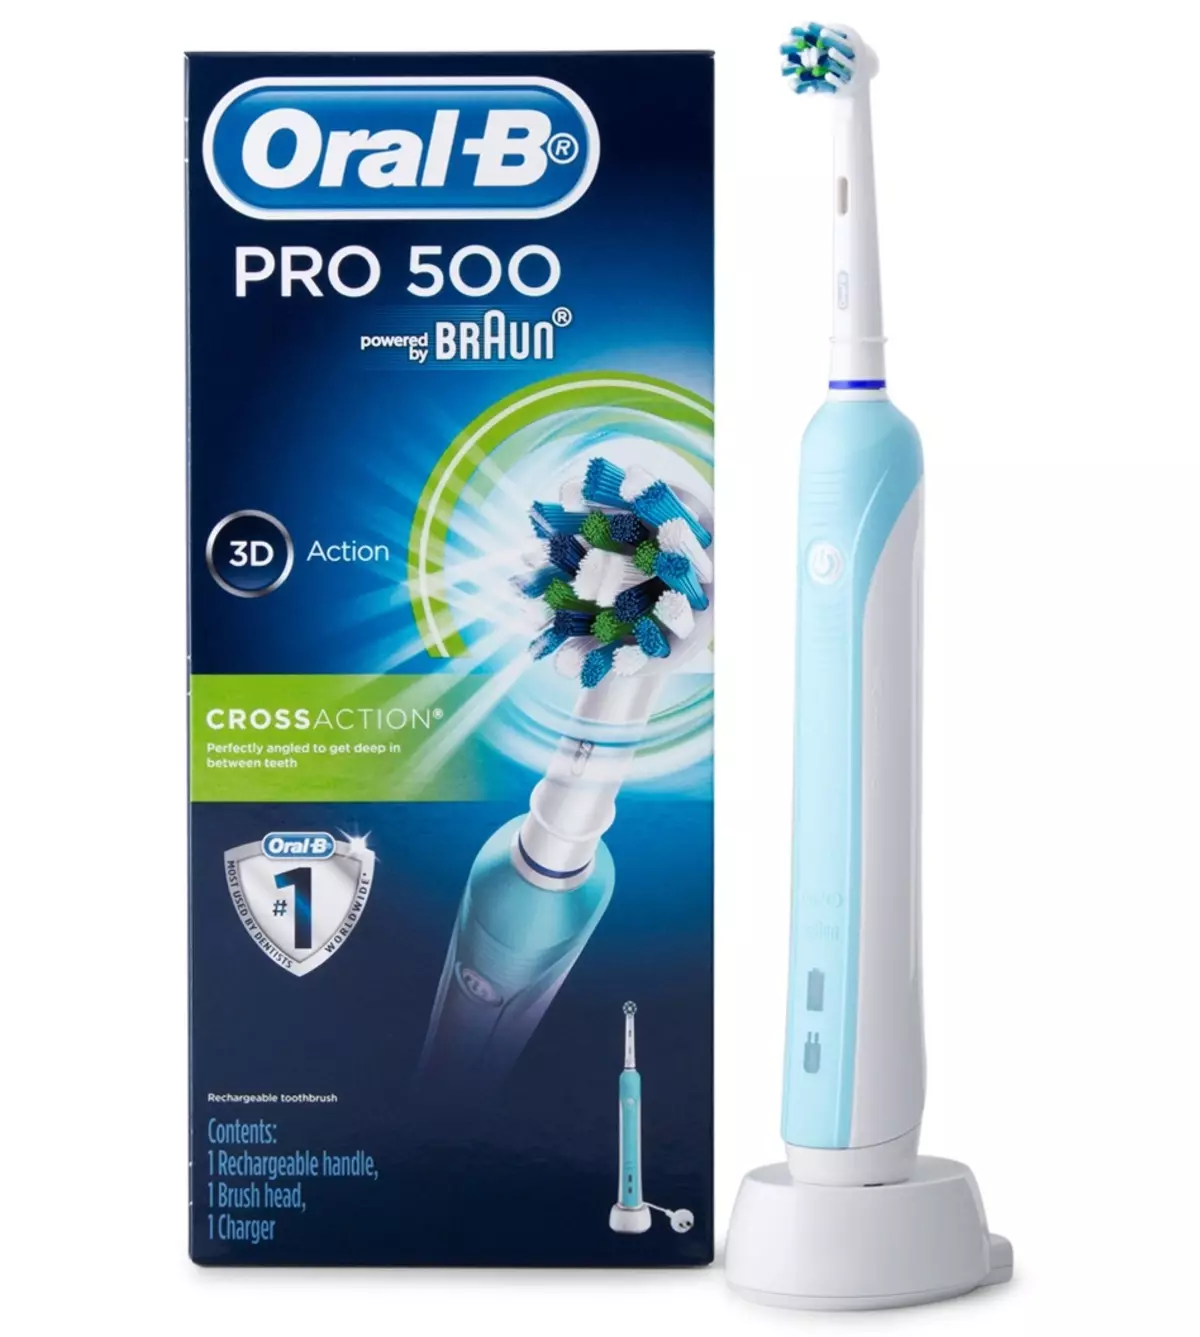 Electrical Toothbrushes 구강 - B : 활력 및 Pro 500, Crossaction 및 3D 흰색, 스마트 4 및 기타 브레운 전해. 선택 방법은 무엇입니까? 리뷰 16159_23